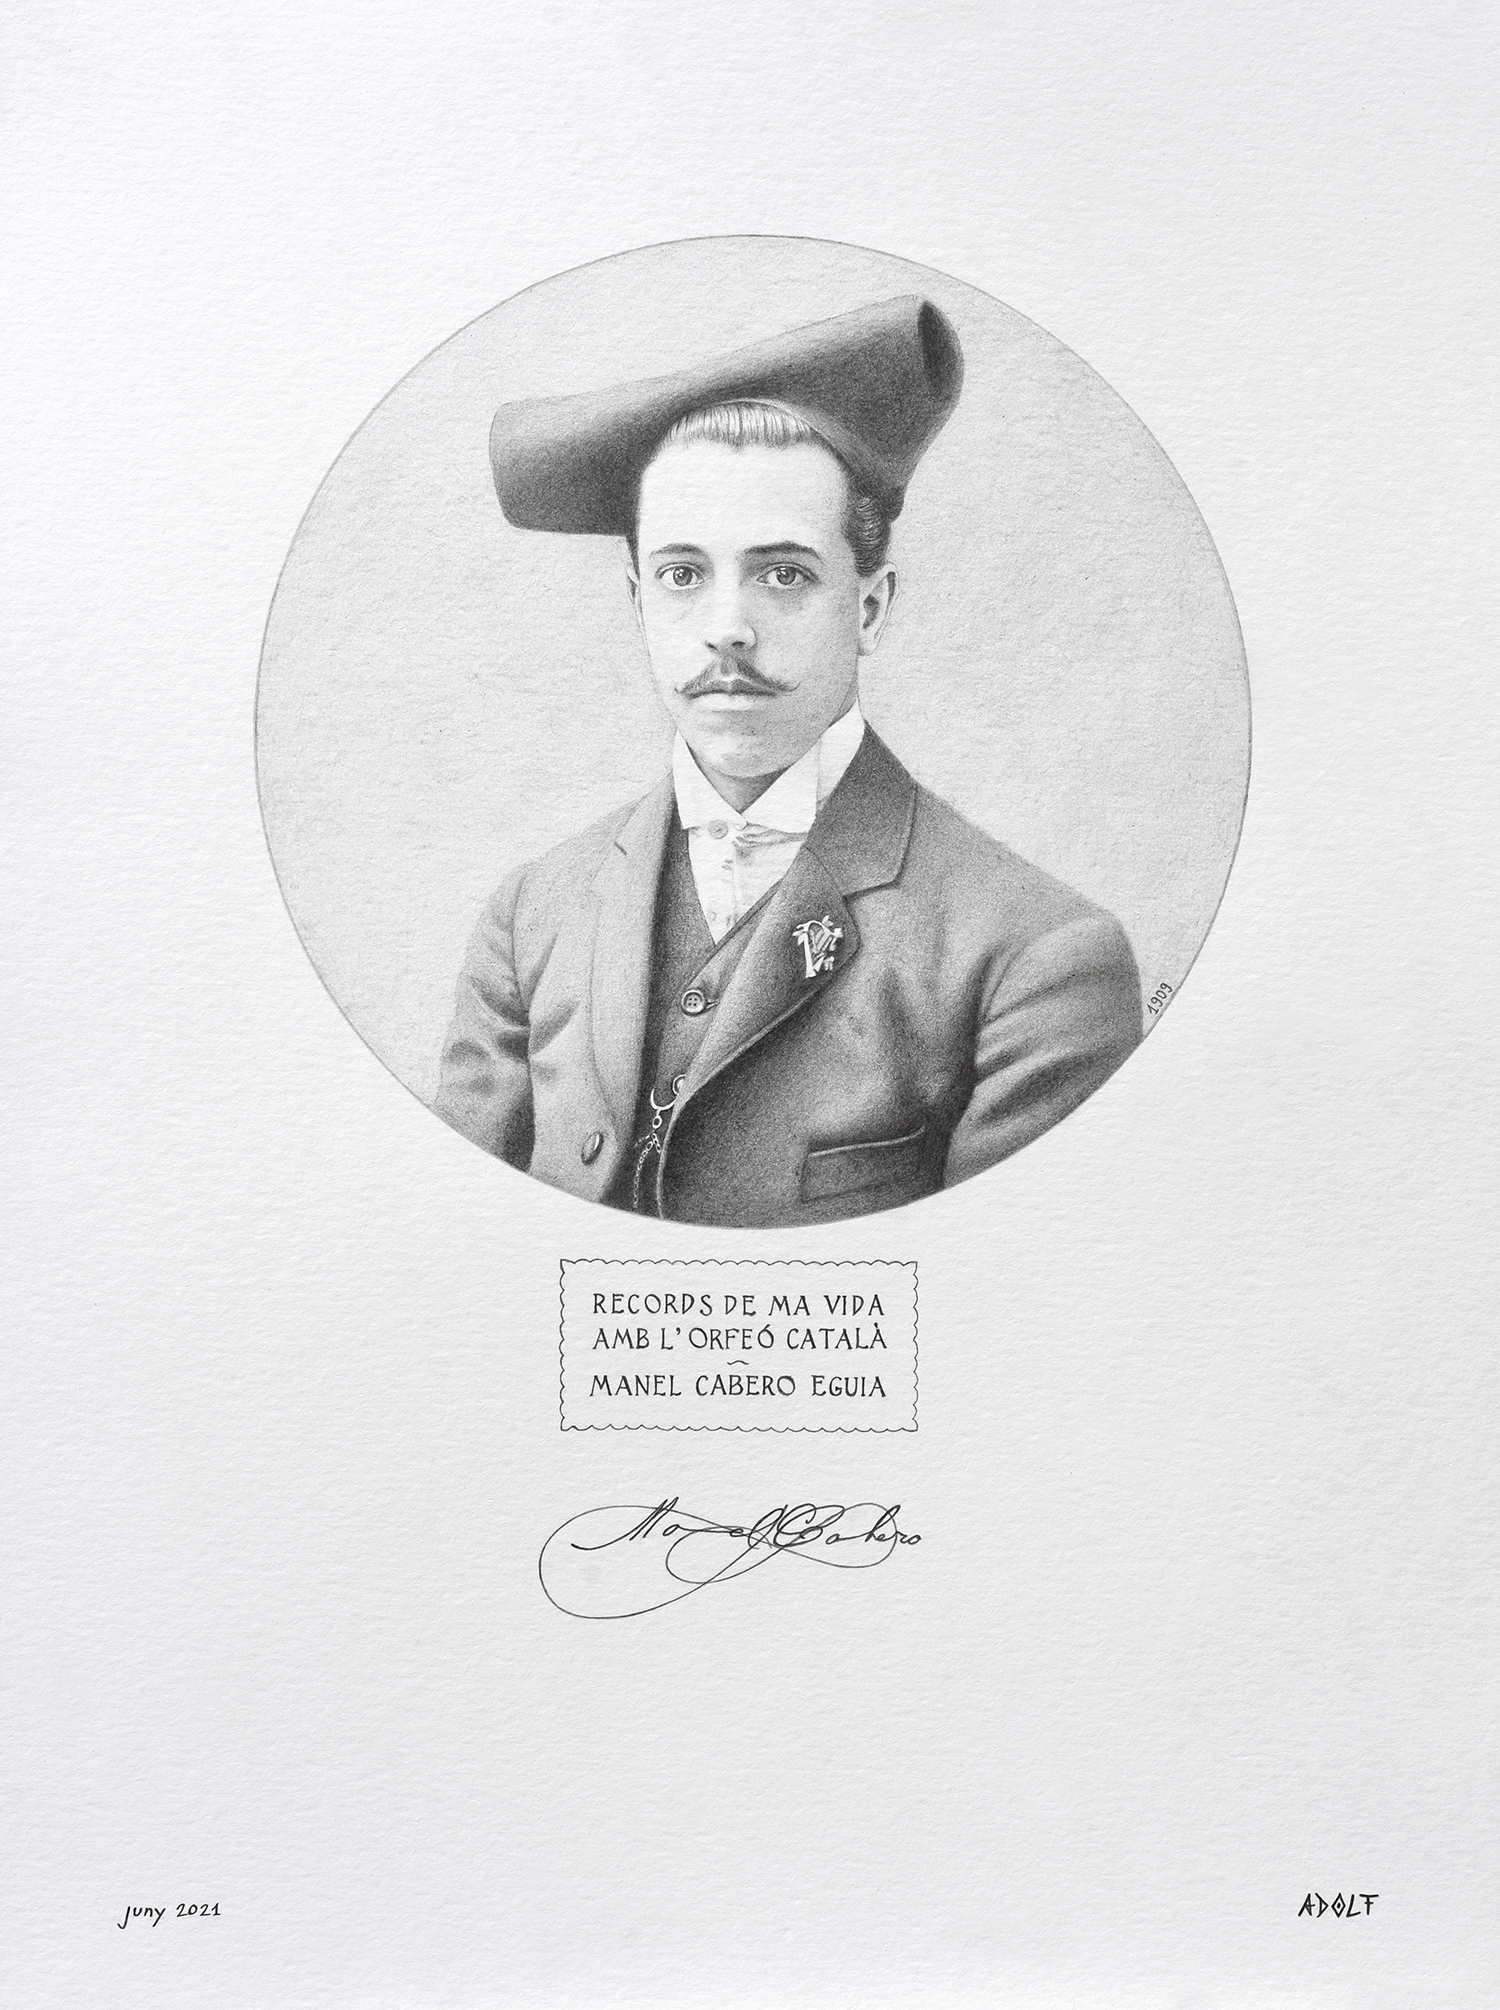 Manuel Cabero Eguia